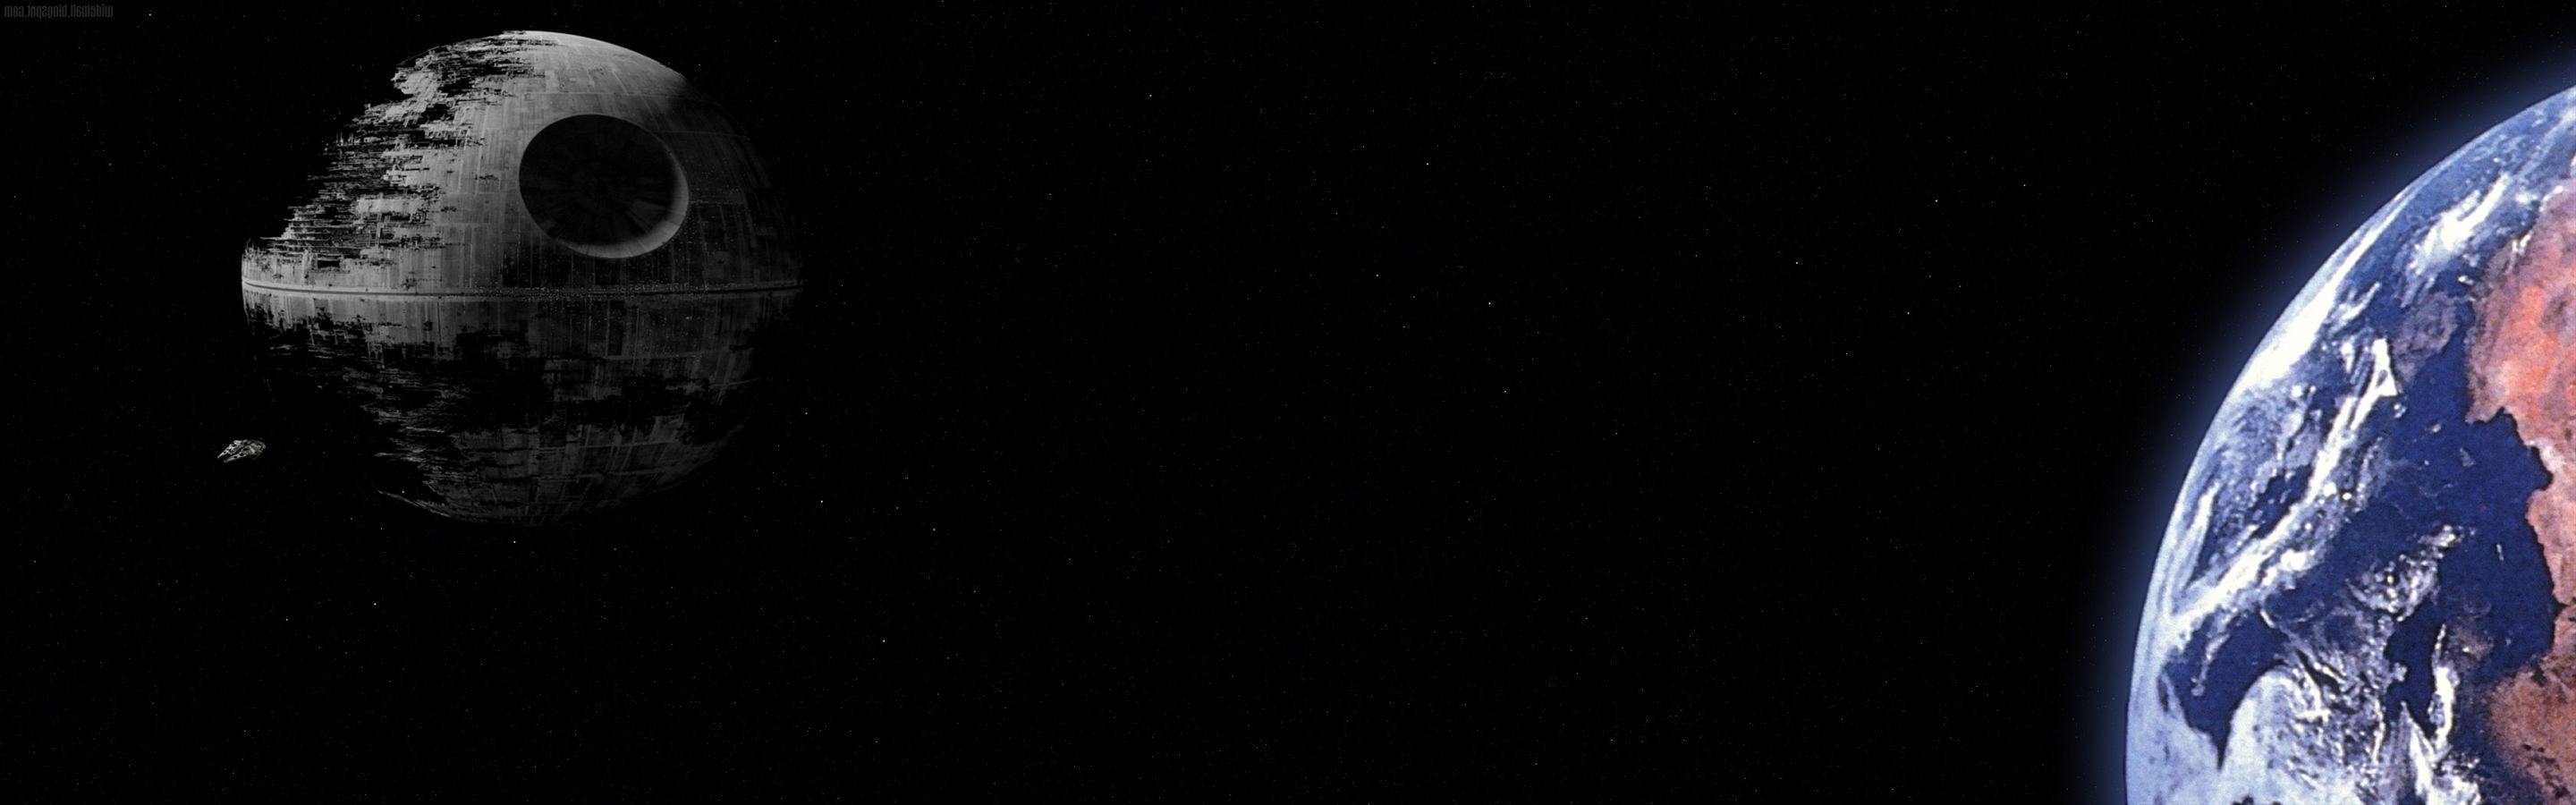 star wars dual screen wallpaper,black,darkness,sky,light,night